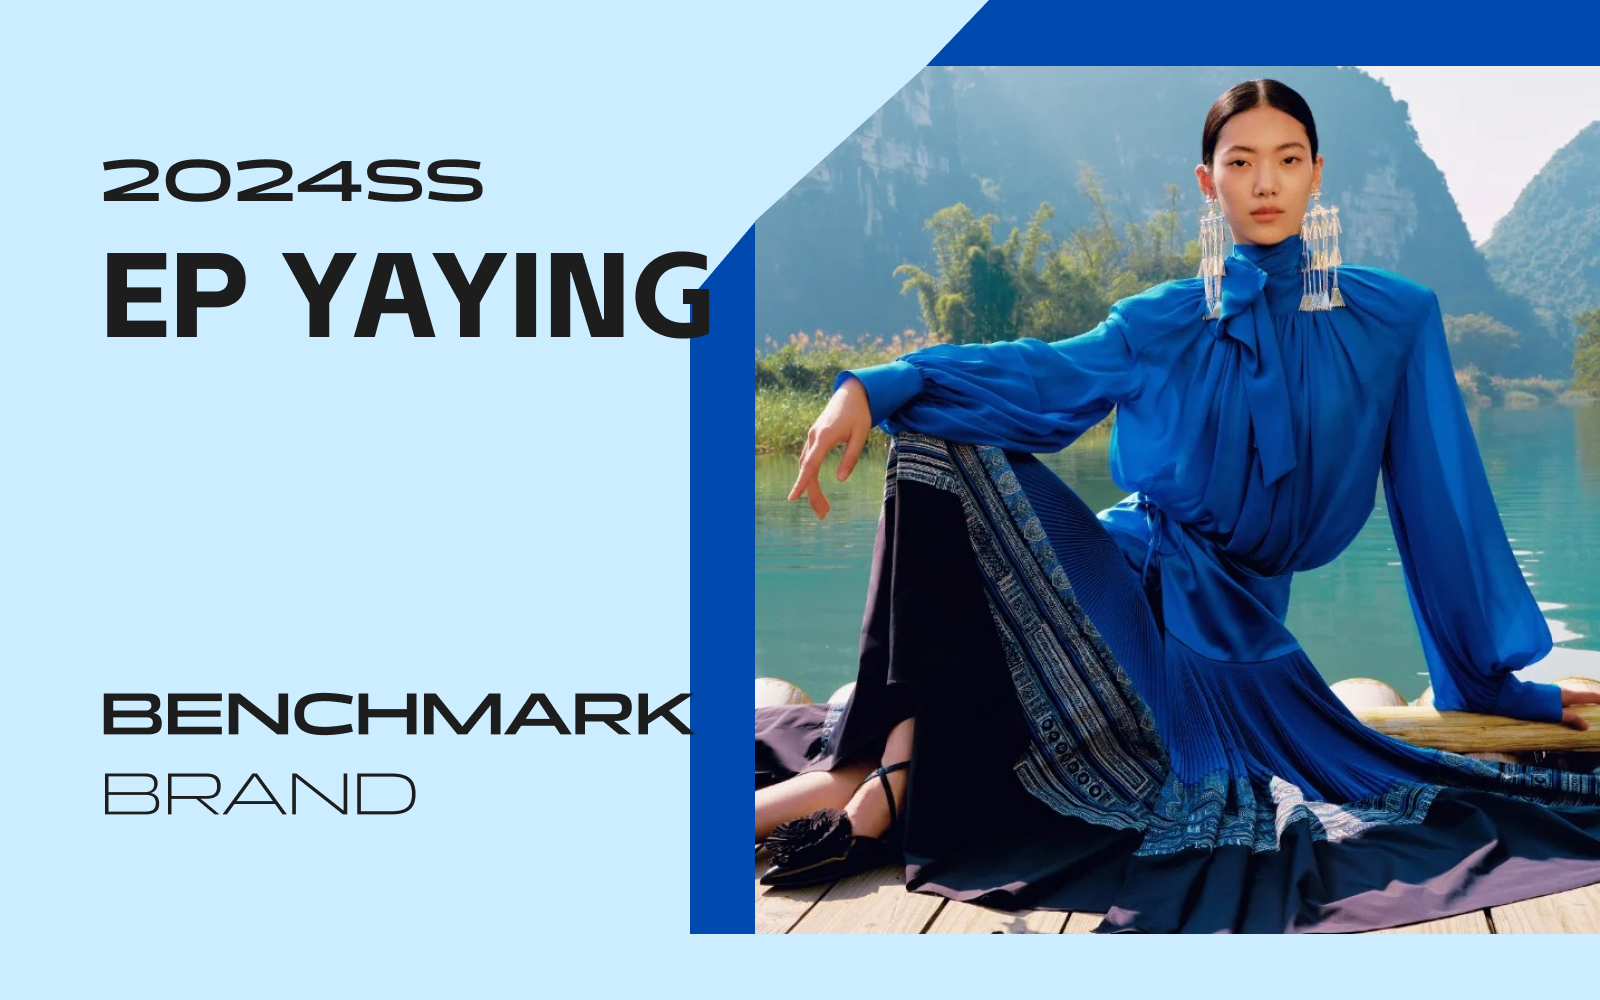 Ethnic Brightness -- The Analysis of EP YAYING The Benchmark Womenswear Brand